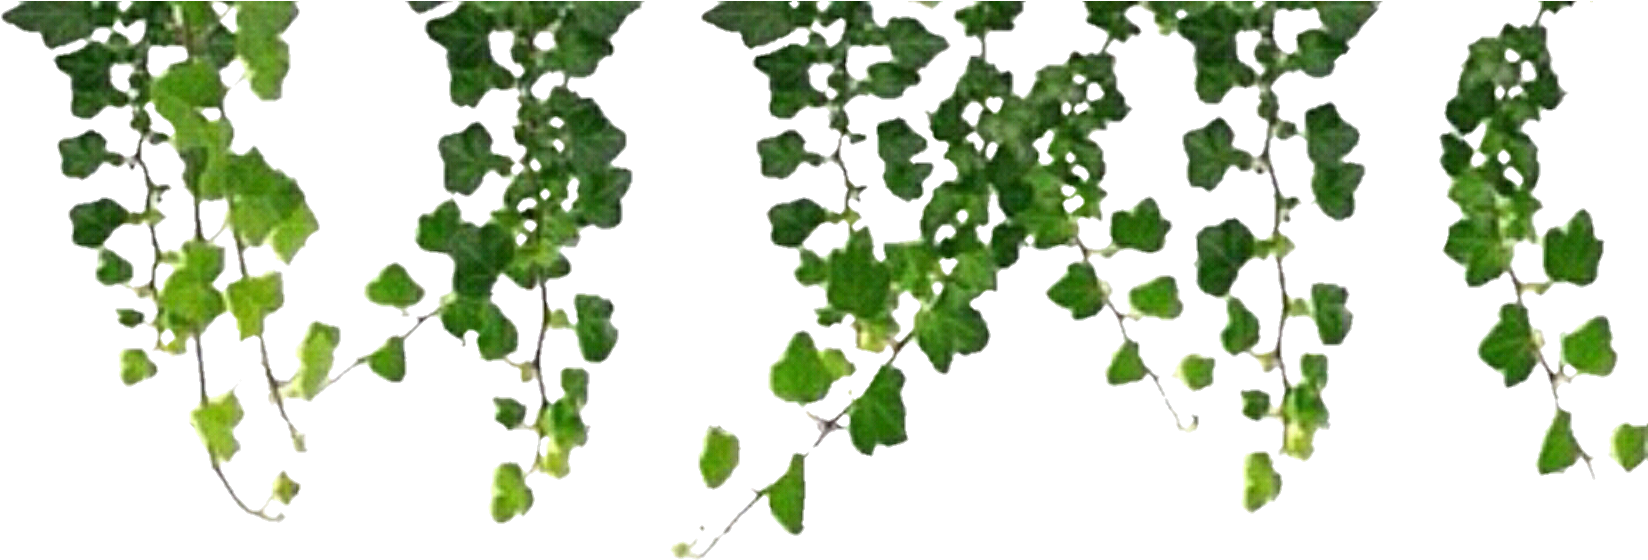 A Green Leafy Pattern On A Black Background